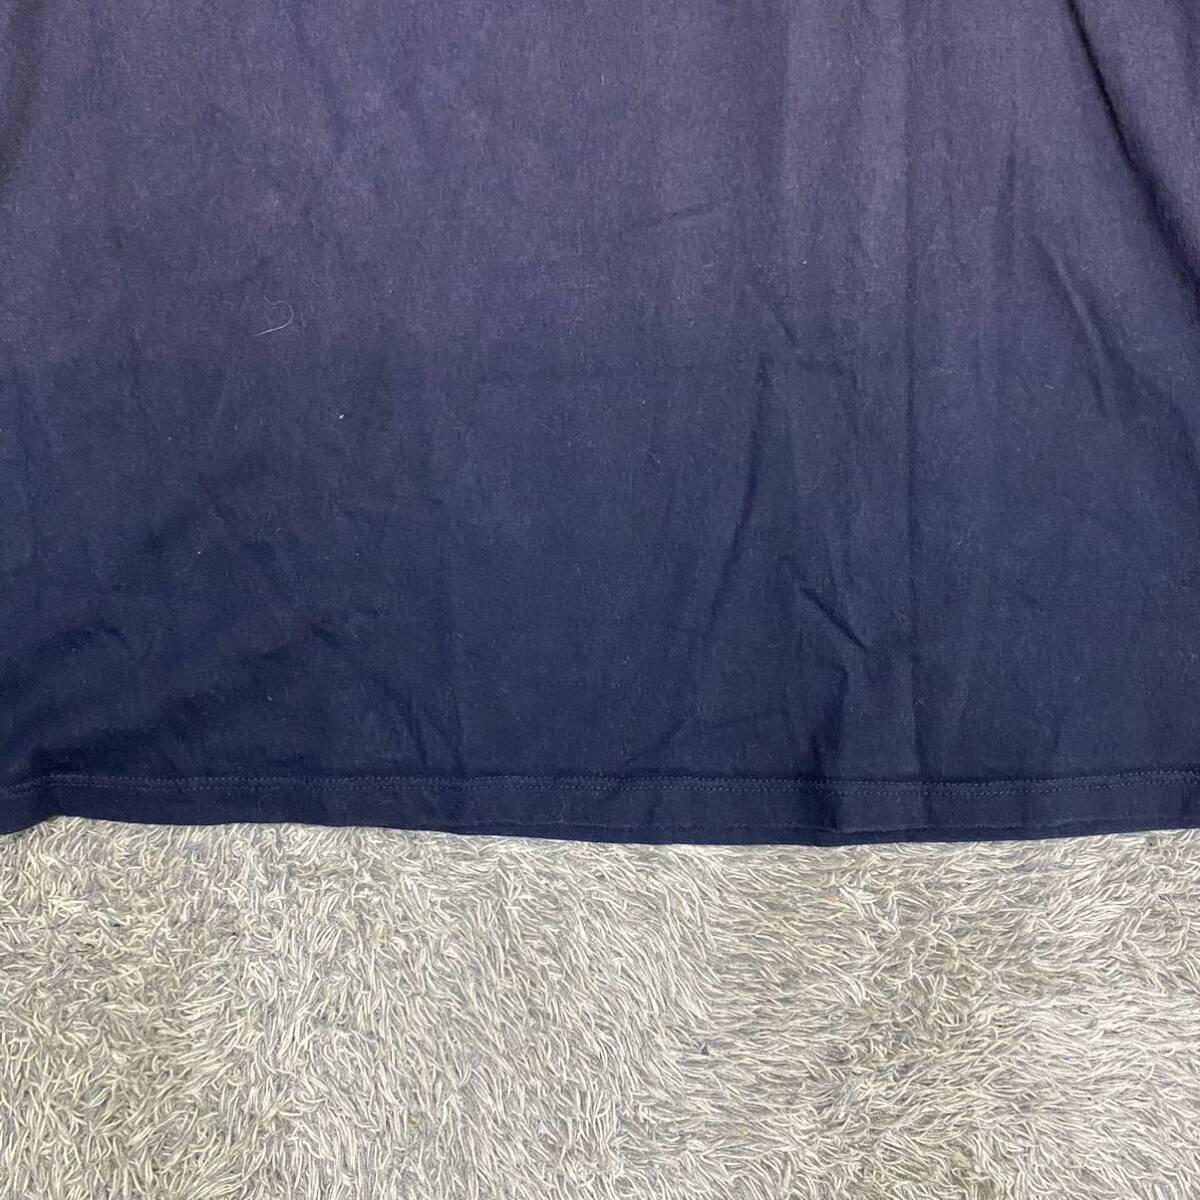 TOMMYHILFIGER トミーヒルフィガー Tシャツ 半袖カットソー サイズL ネイビー 紺色 メンズ トップス 最落なし （U18）の画像4